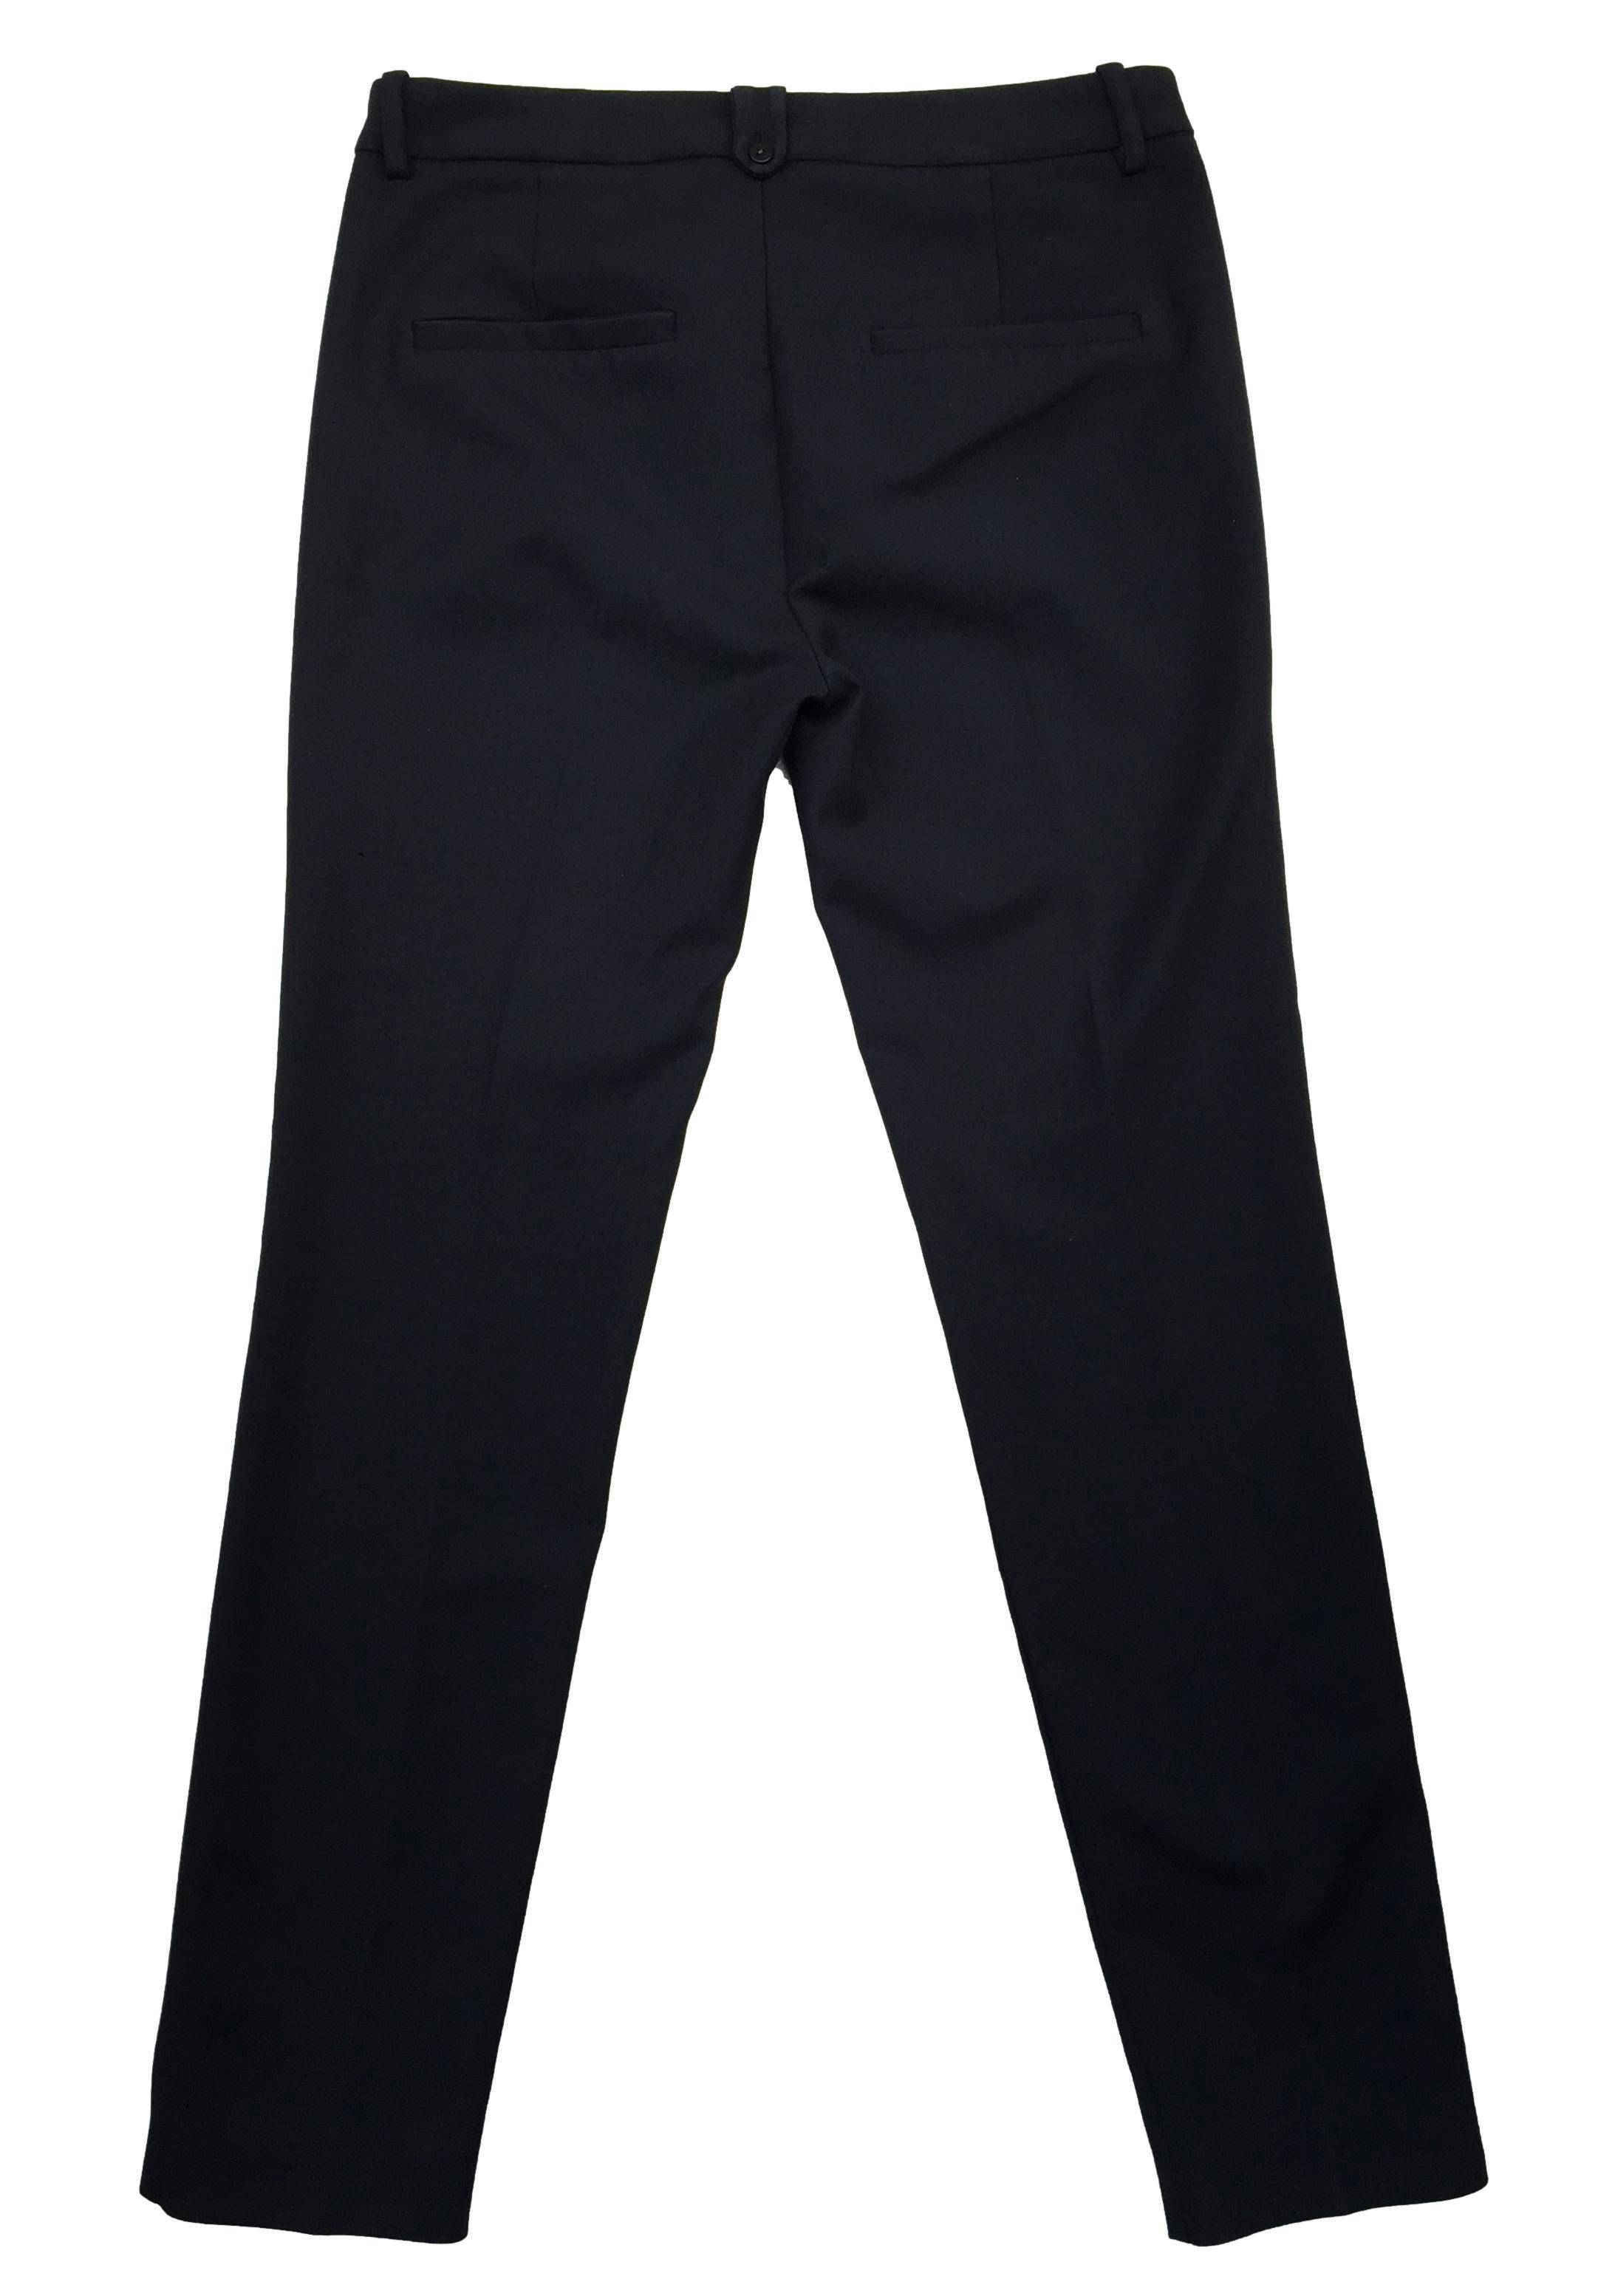 Pantalón Zara negro, formal, corte slim. Cintura 70cm Tiro 22cm Largo 90cm